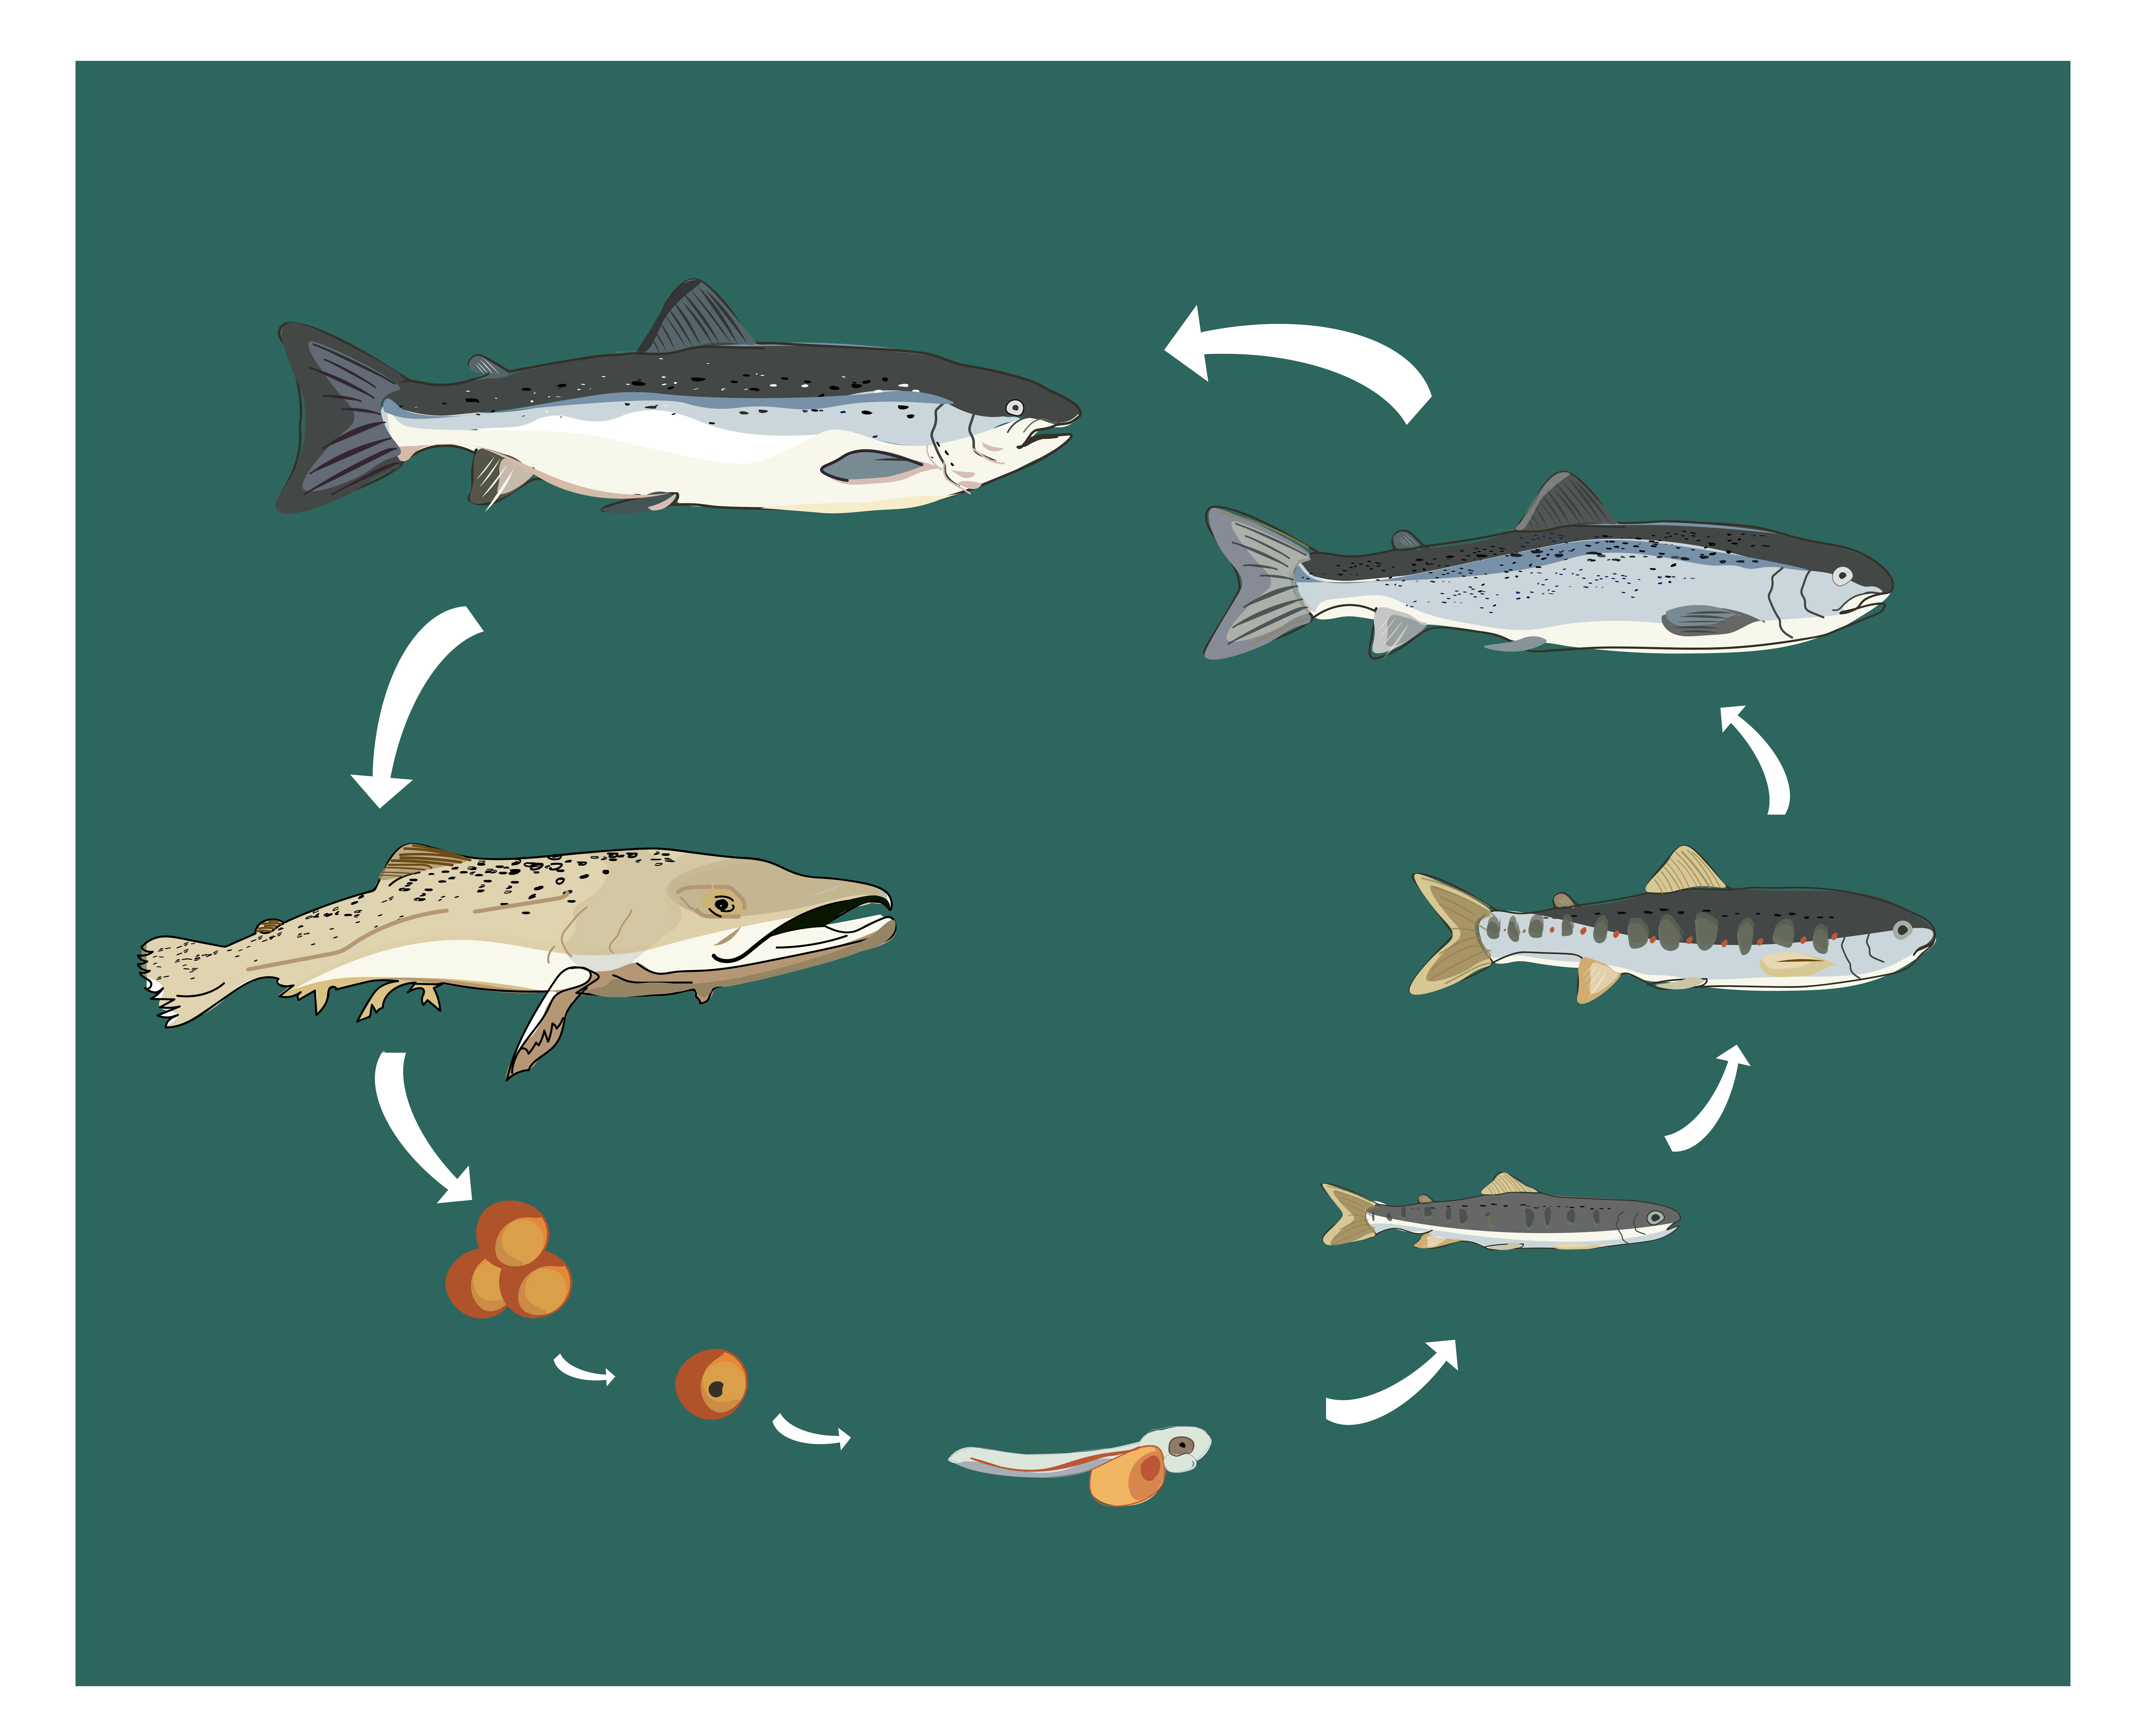 Salmon lifecycle